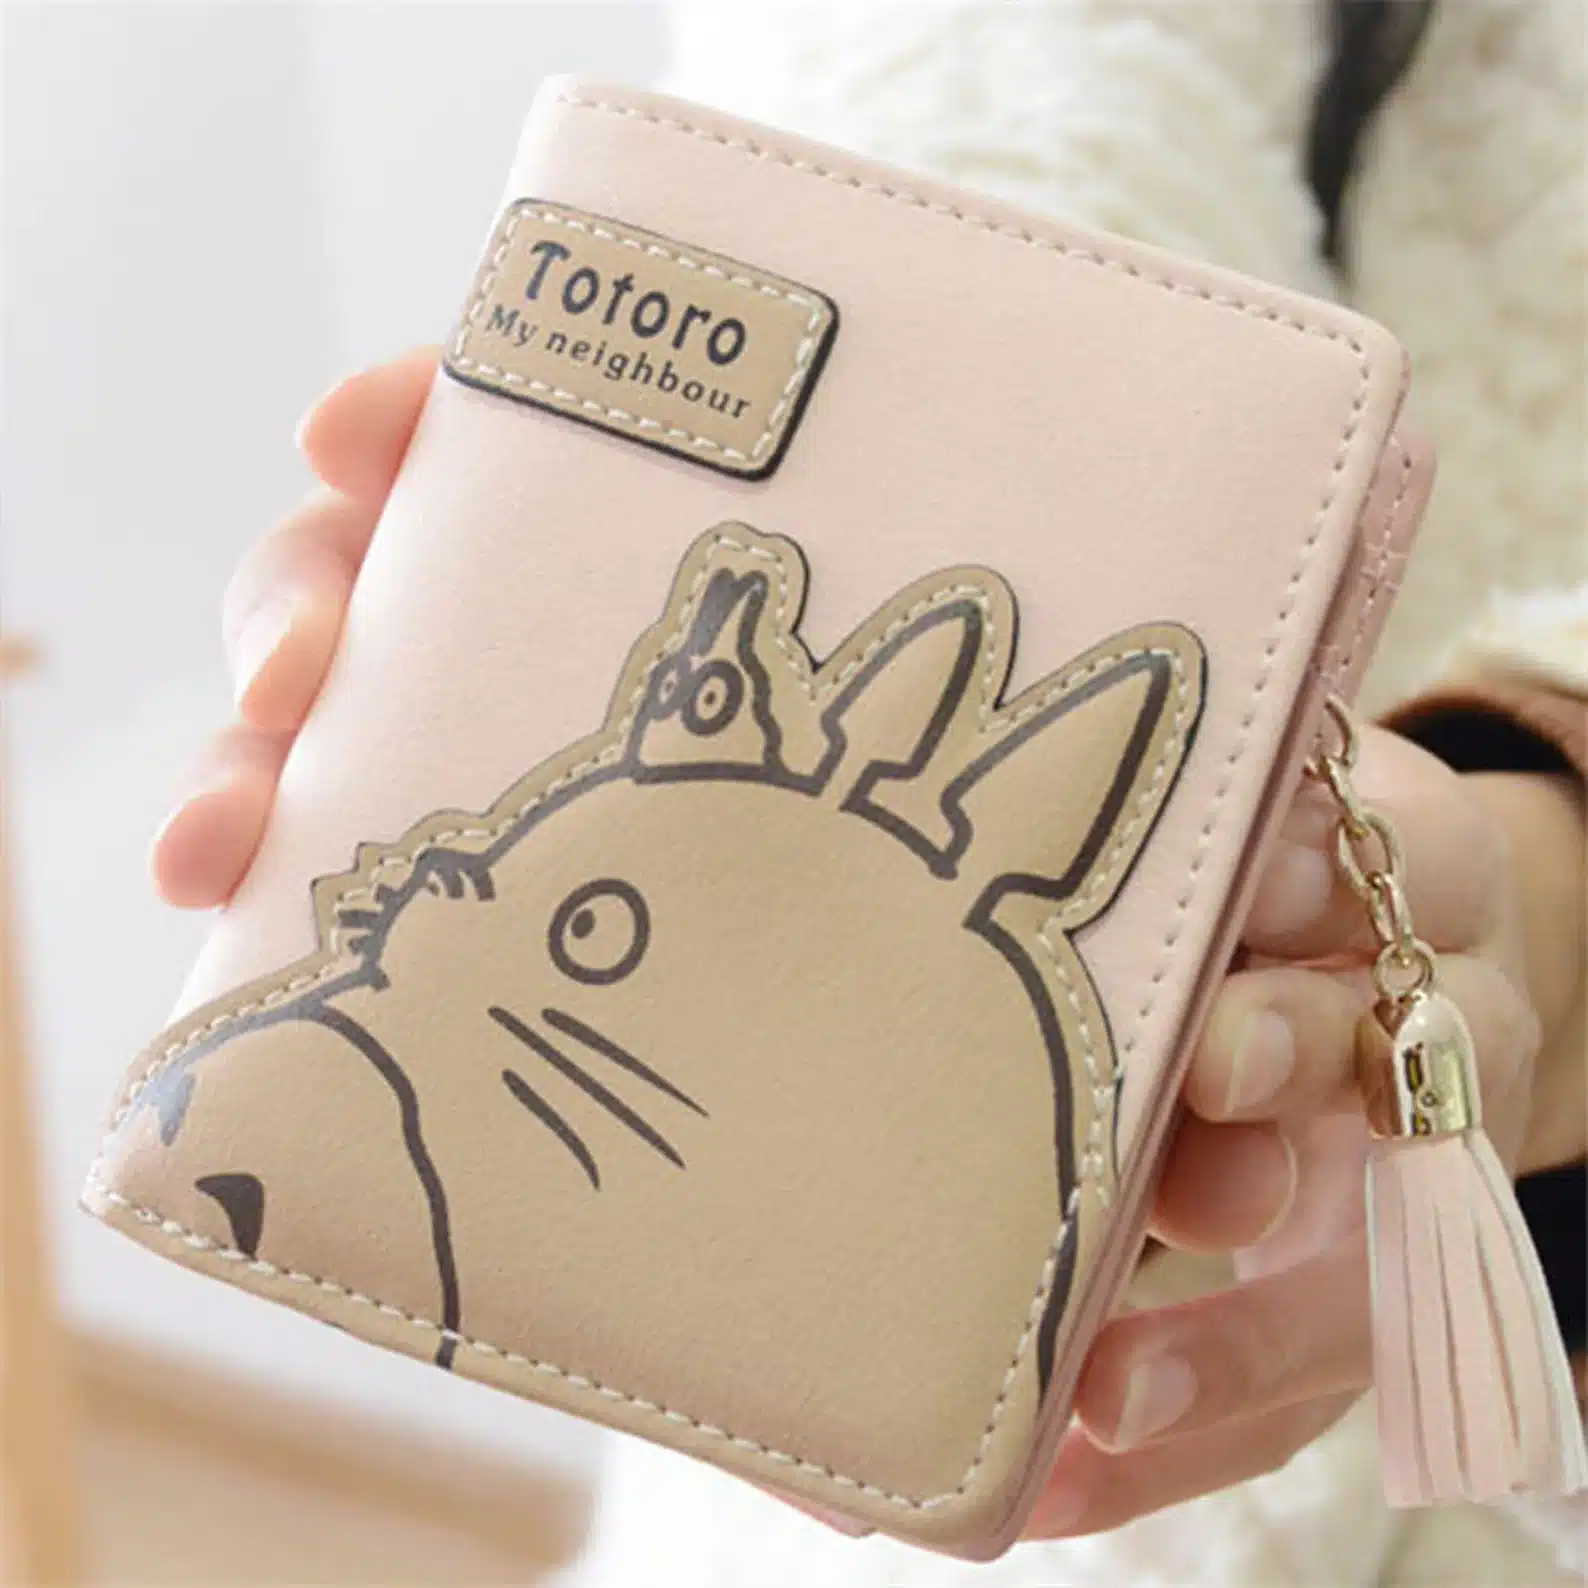 My Neighbor Totoro Wallet